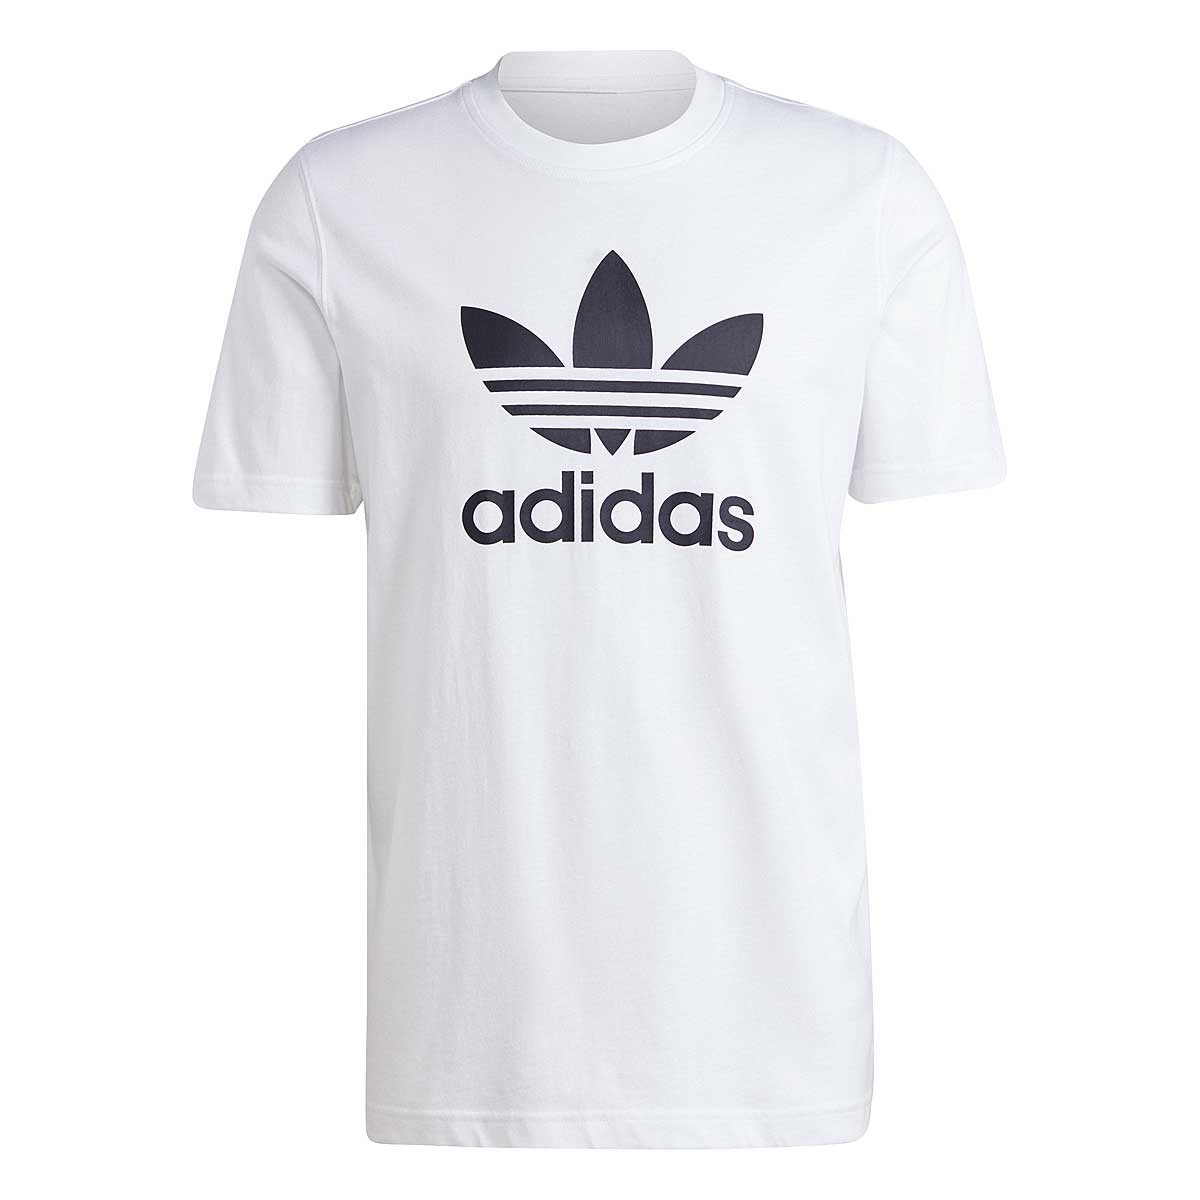 Adidas Trefoil T-shirt, Weiß/schwarz XL